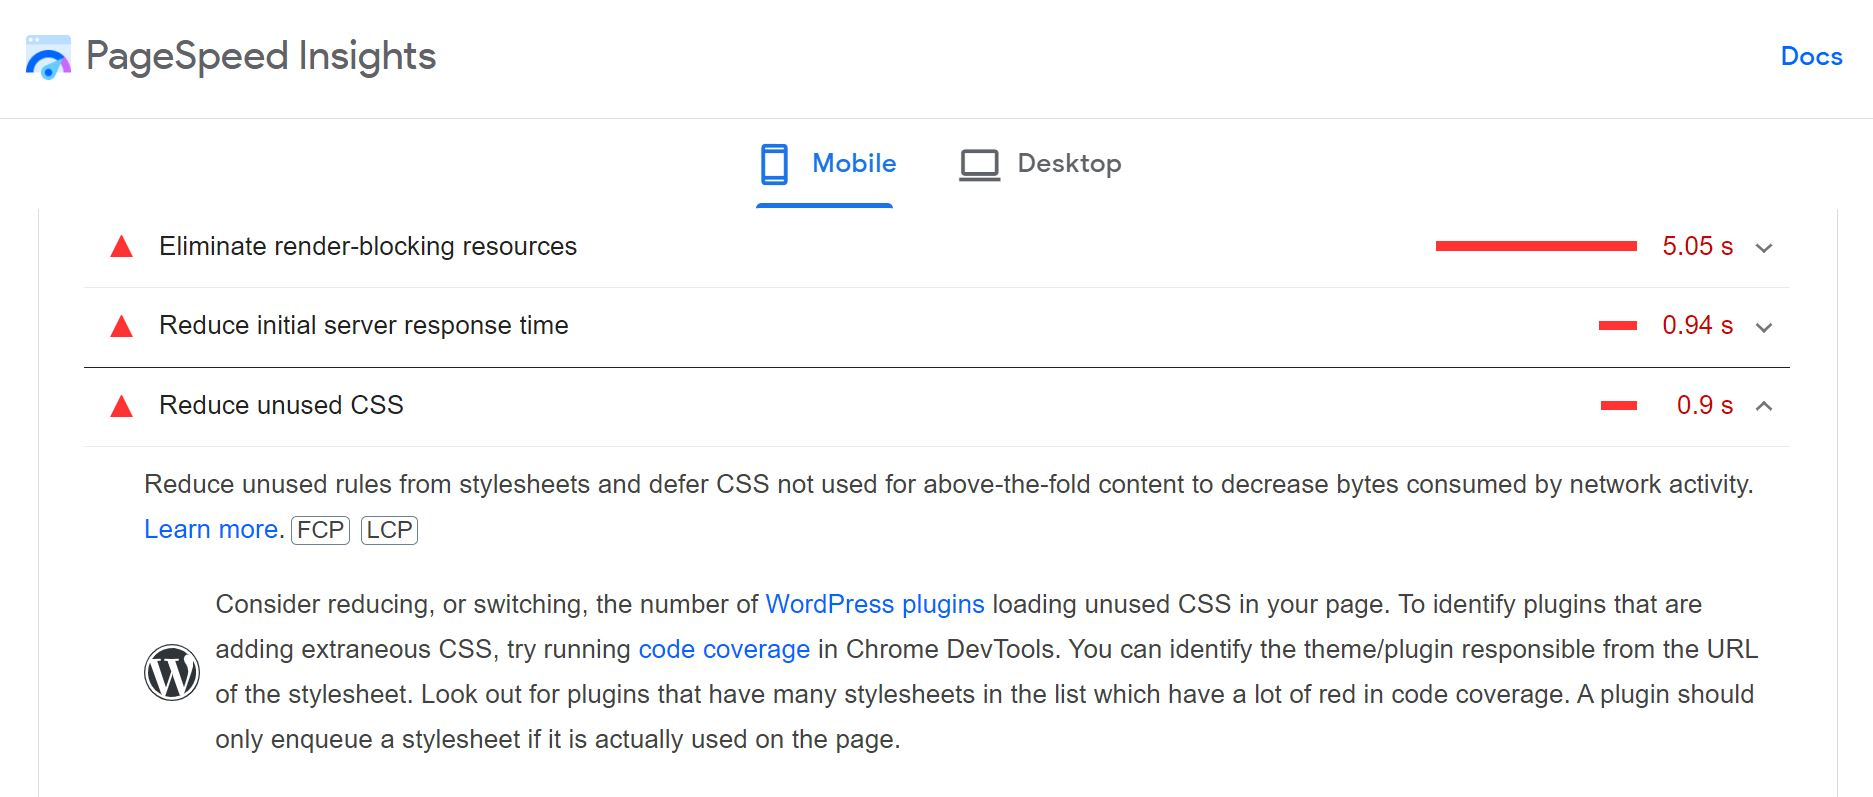 PageSpeed Insights 建议减少未使用的 CSS